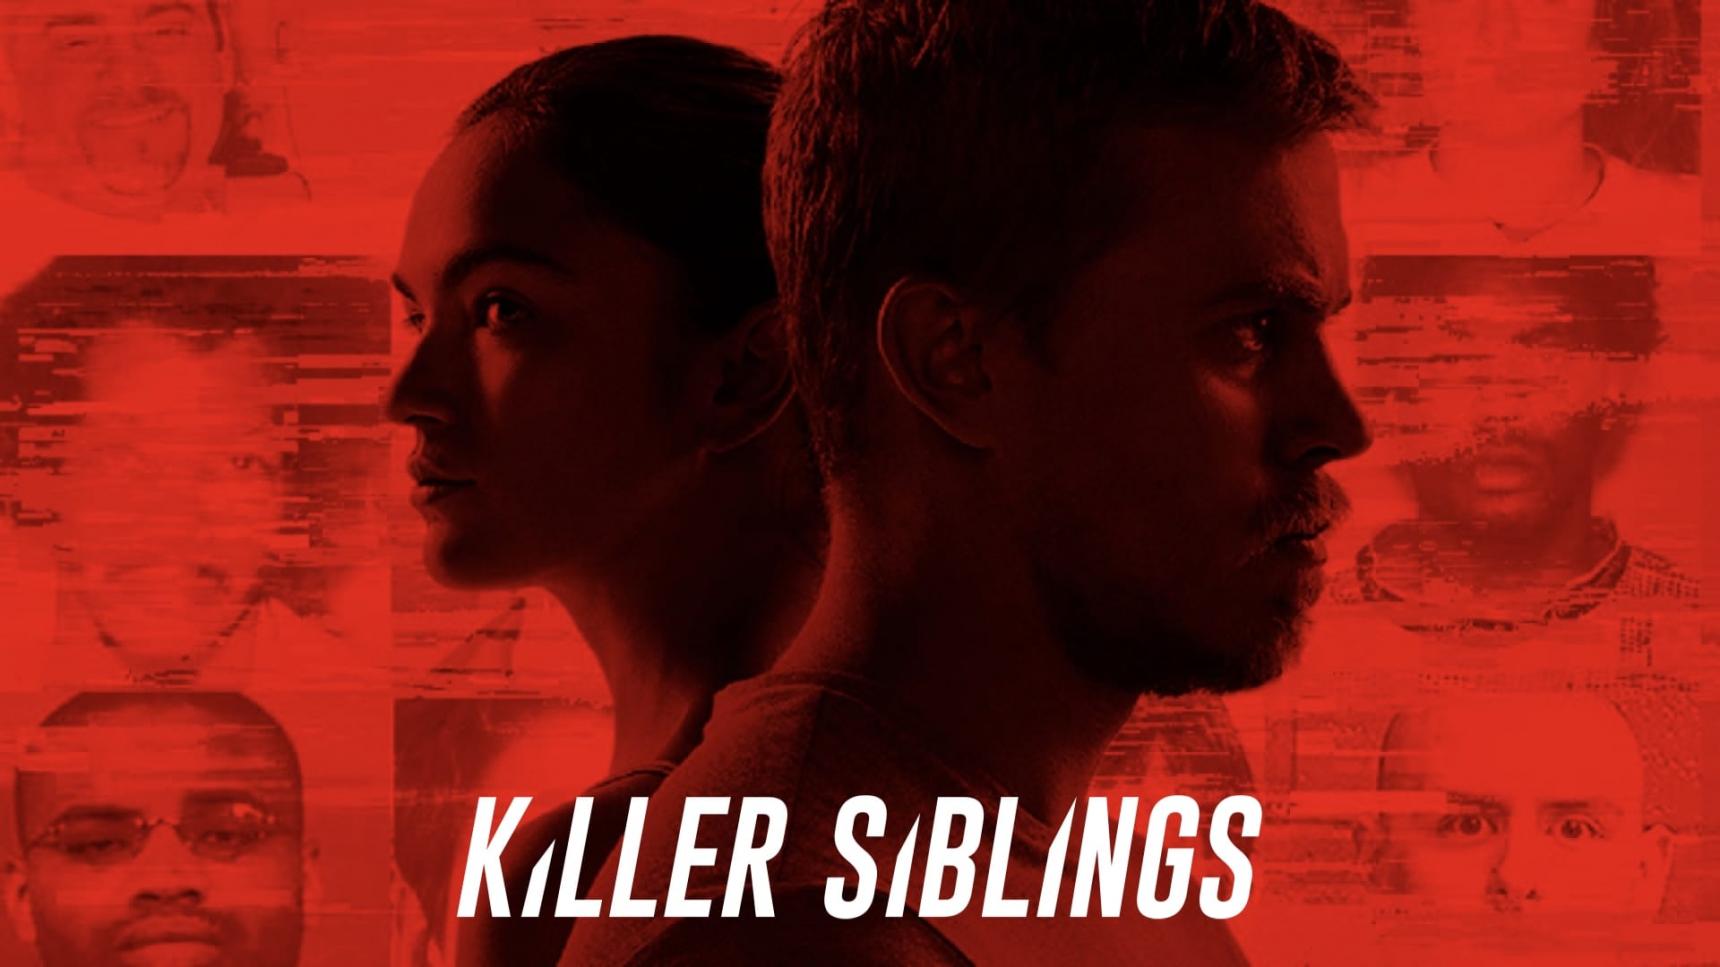 Poster del episodio 1 de Killer Siblings online